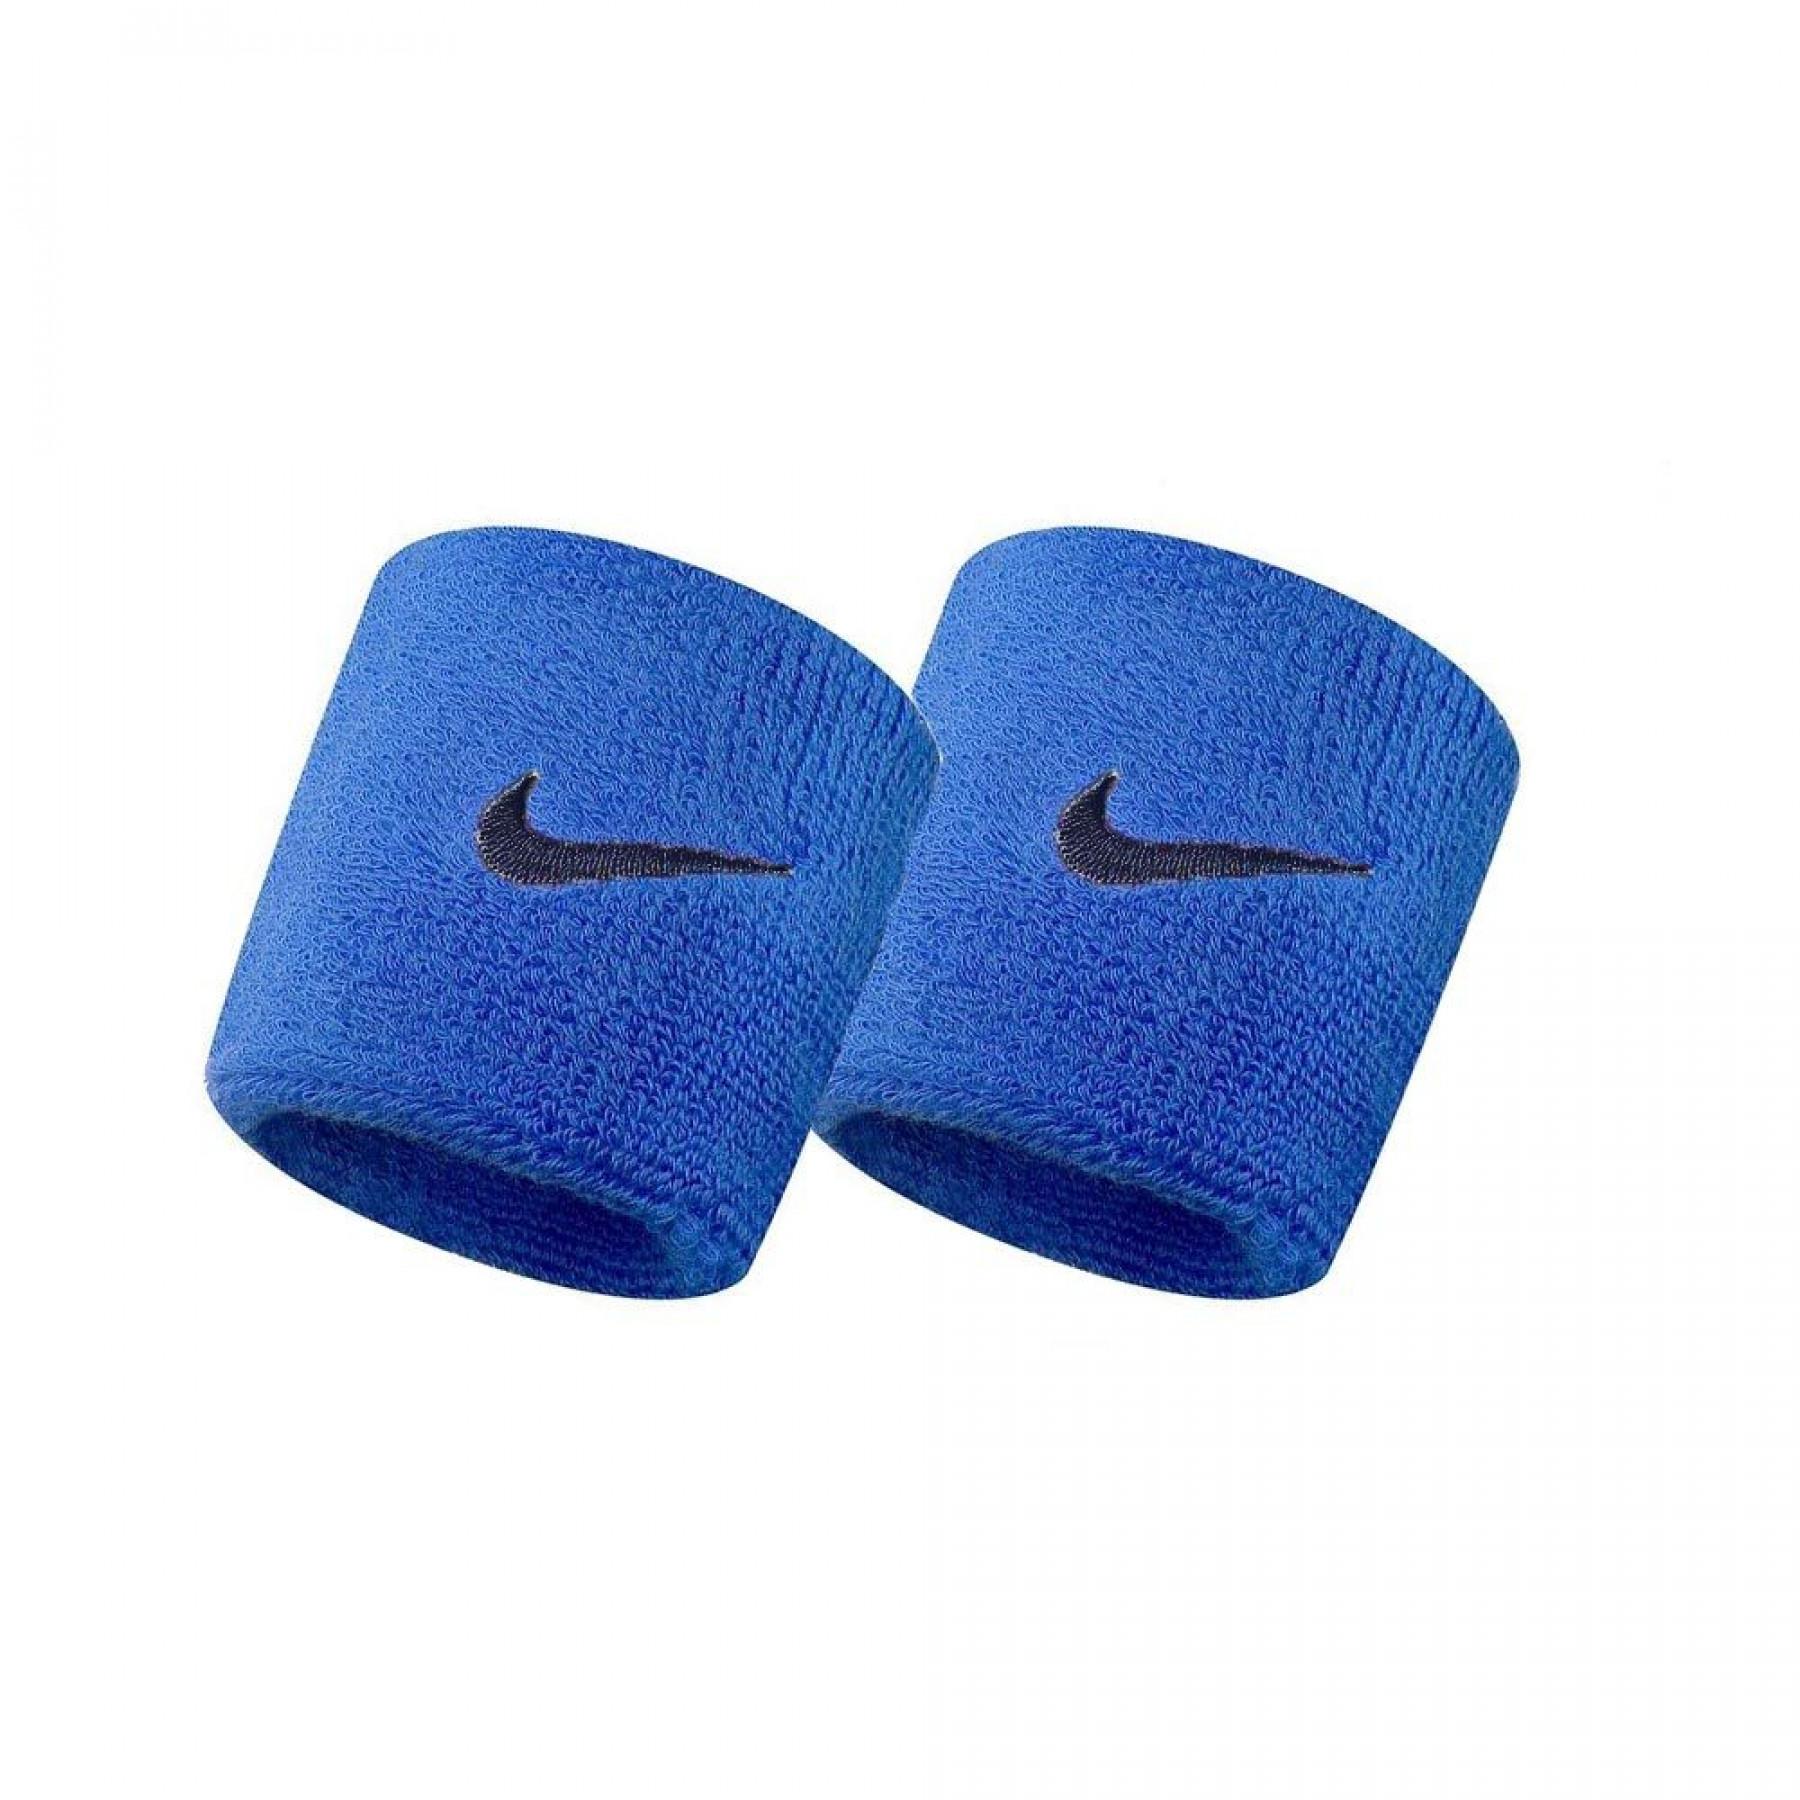 Sponge cuffs Nike swoosh